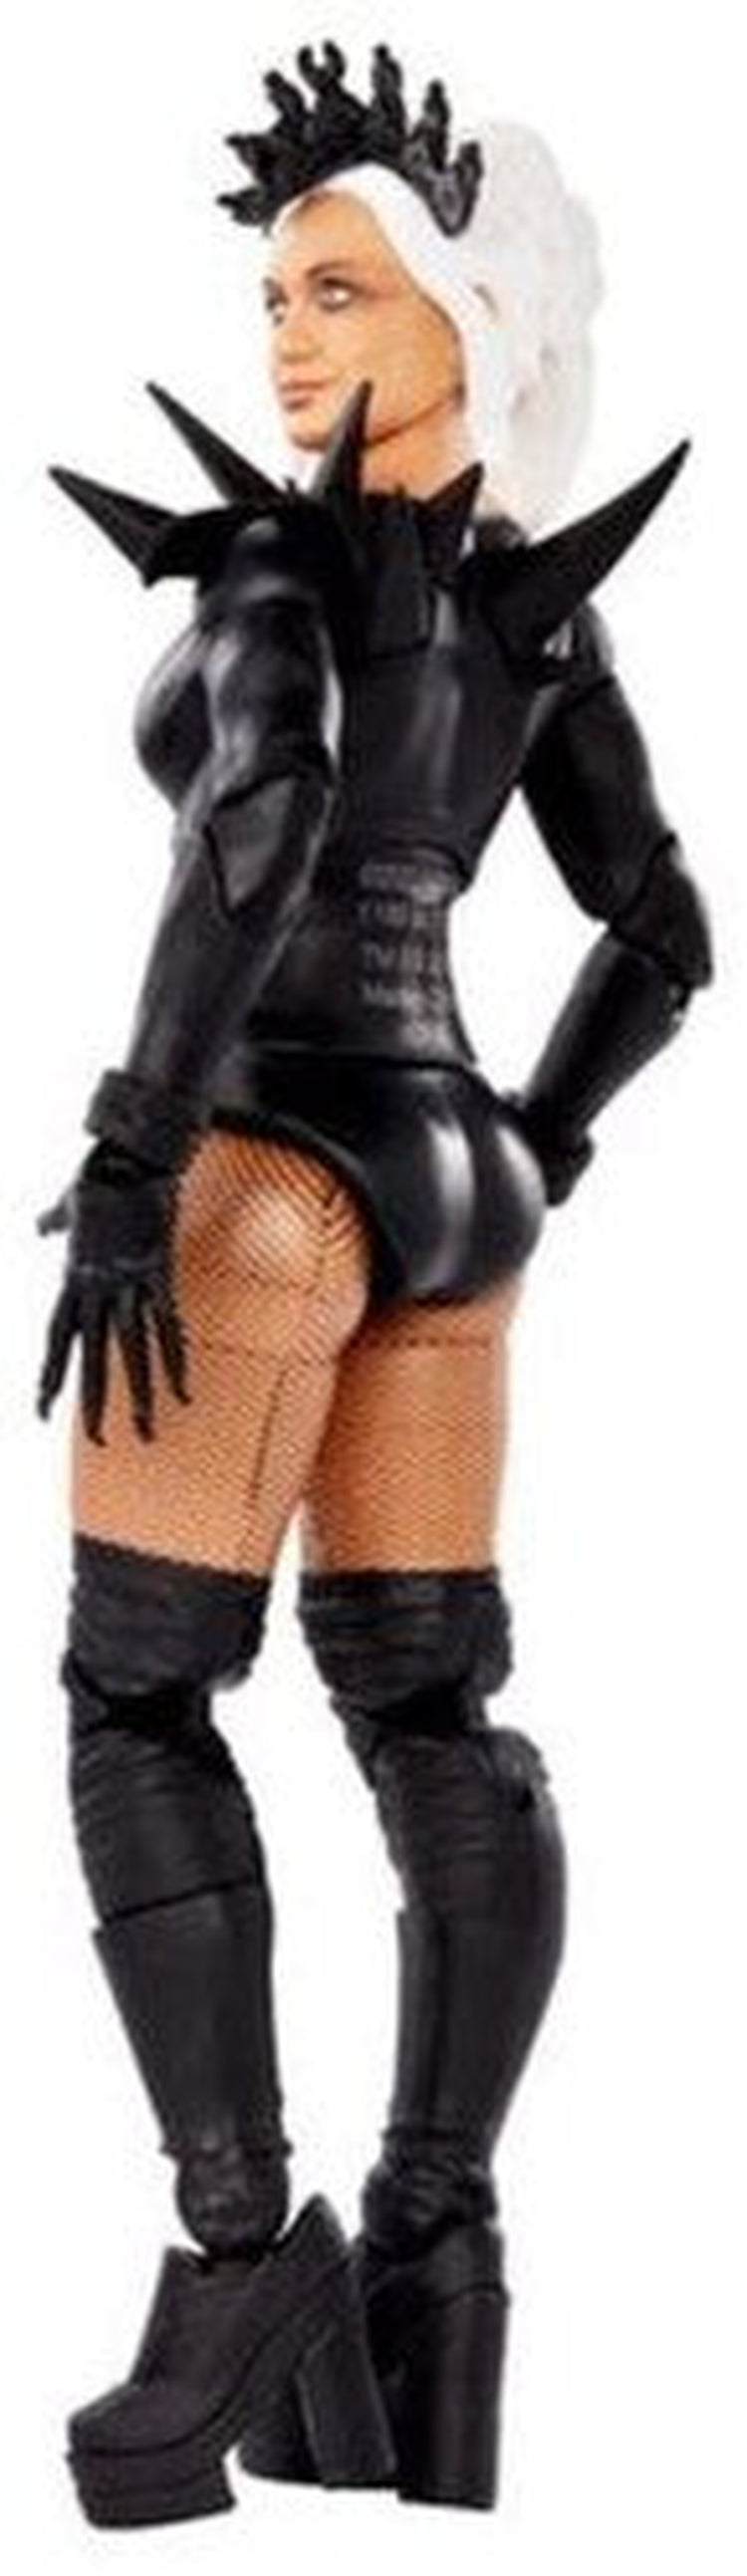 Mattel Collectible - WWE Elite Collection Scarlett